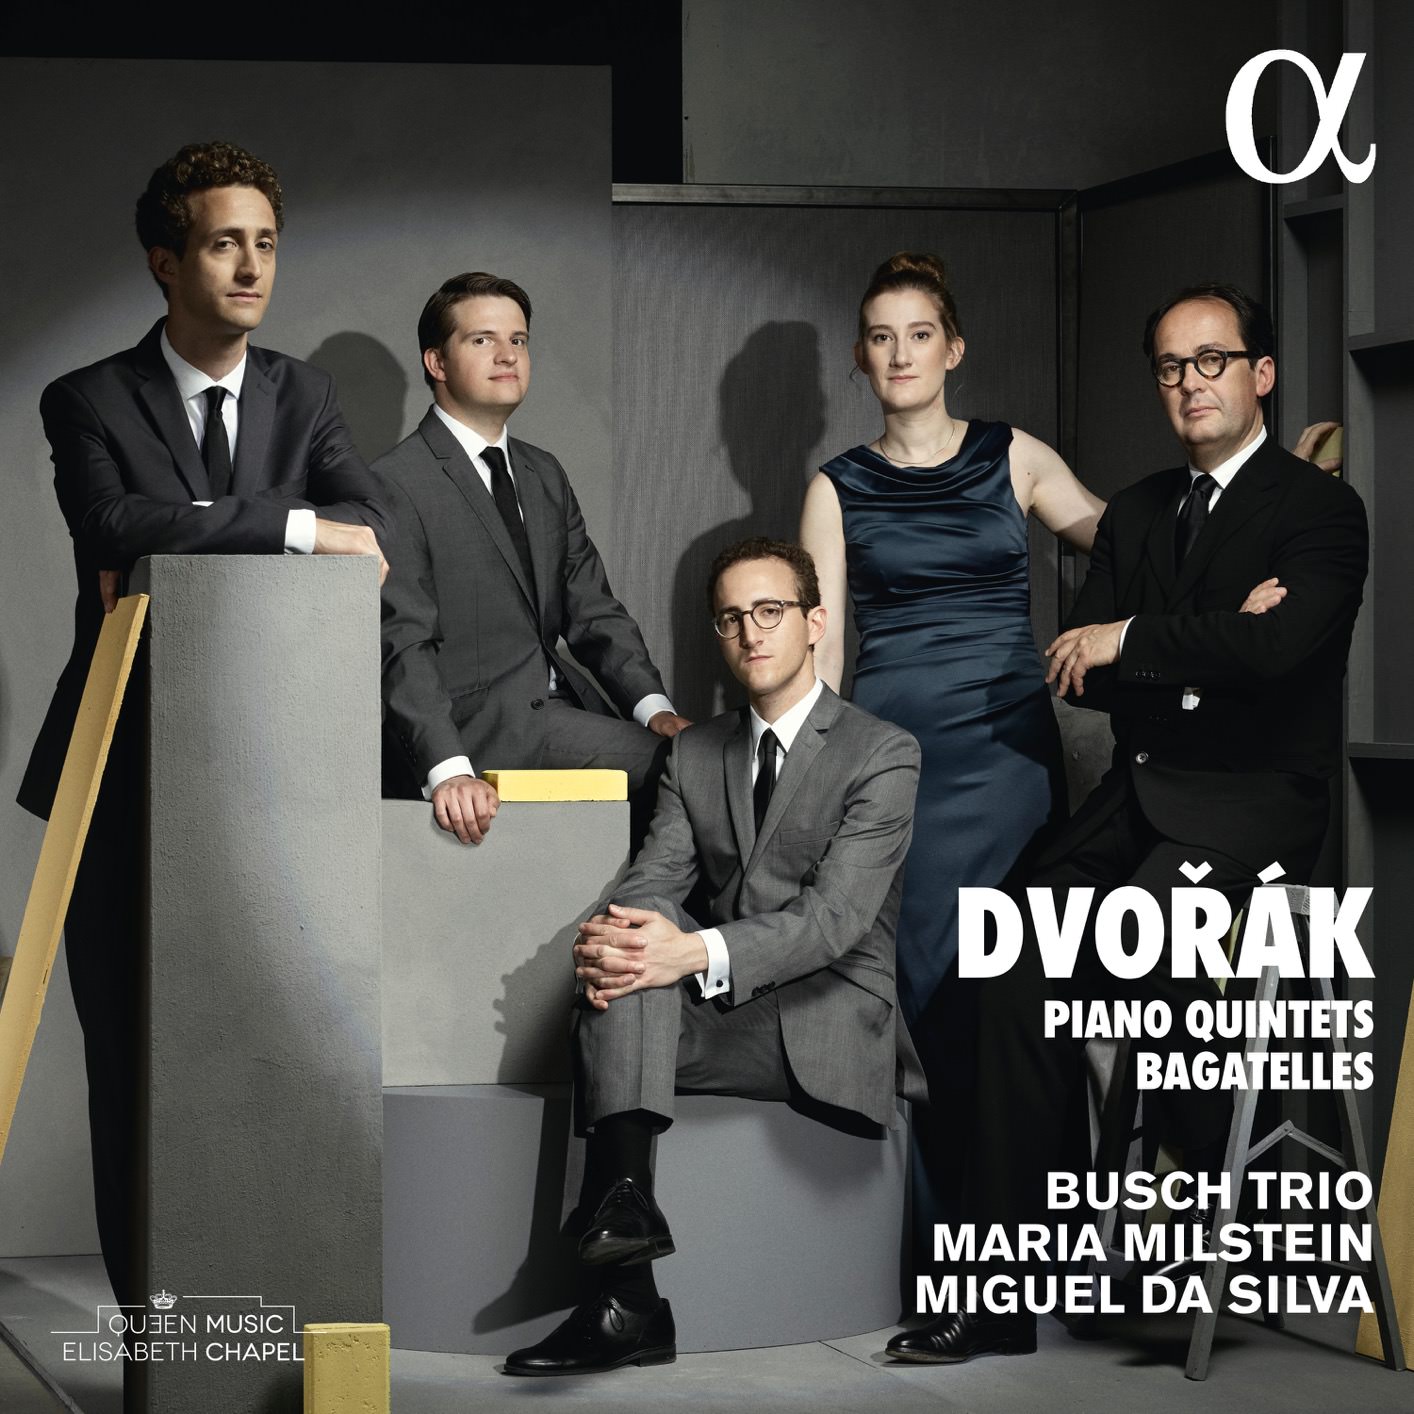 Busch Trio, Maria Milstein & Miguel Da Silva - Dvorak: Piano Quintets & Bagatelles (2018) [FLAC 24bit/96kHz]